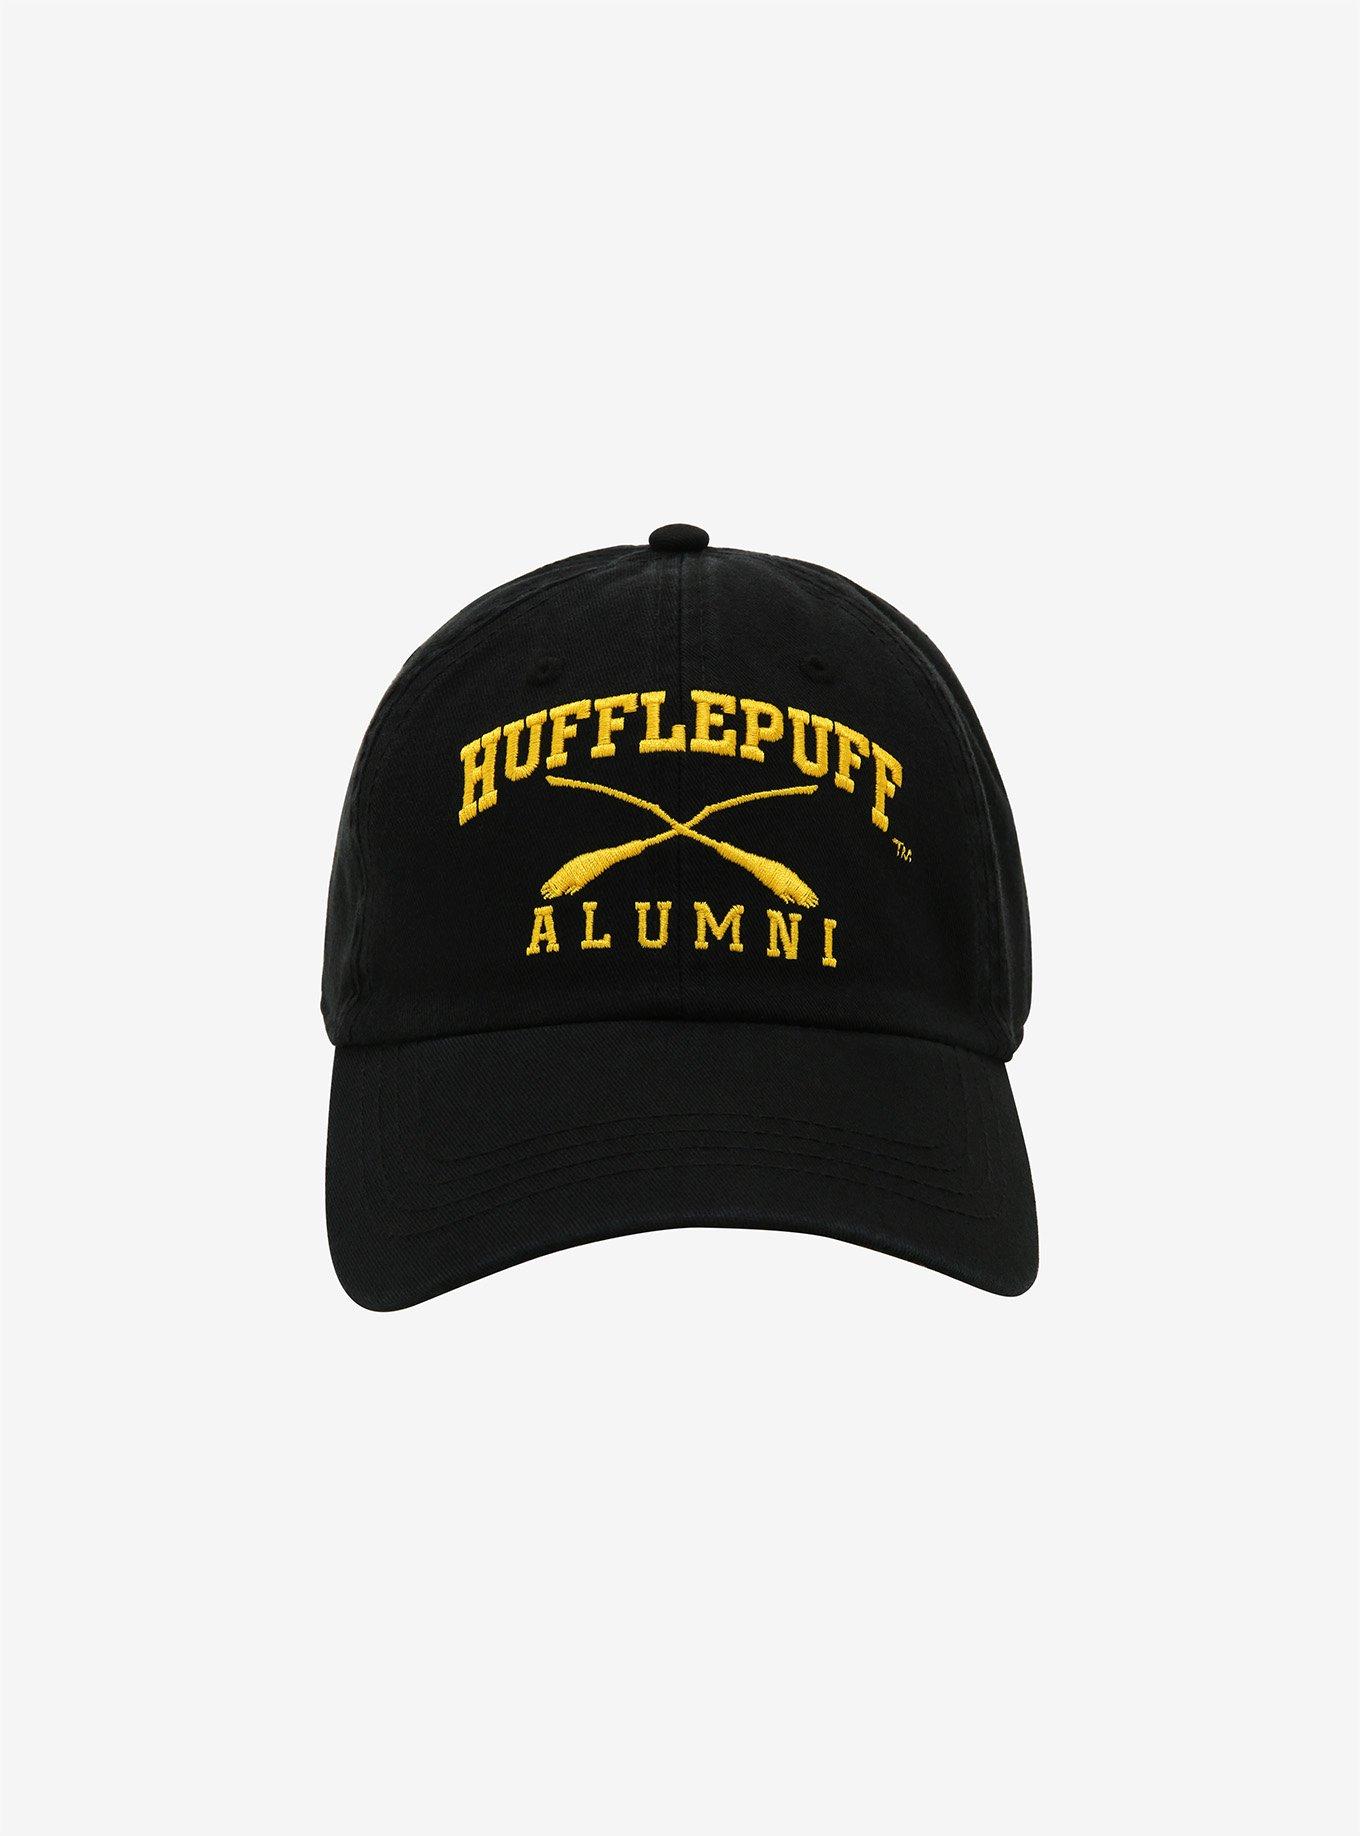 Hufflepuff BoxLunch Potter | Exclusive Harry Cap Alumni BoxLunch -